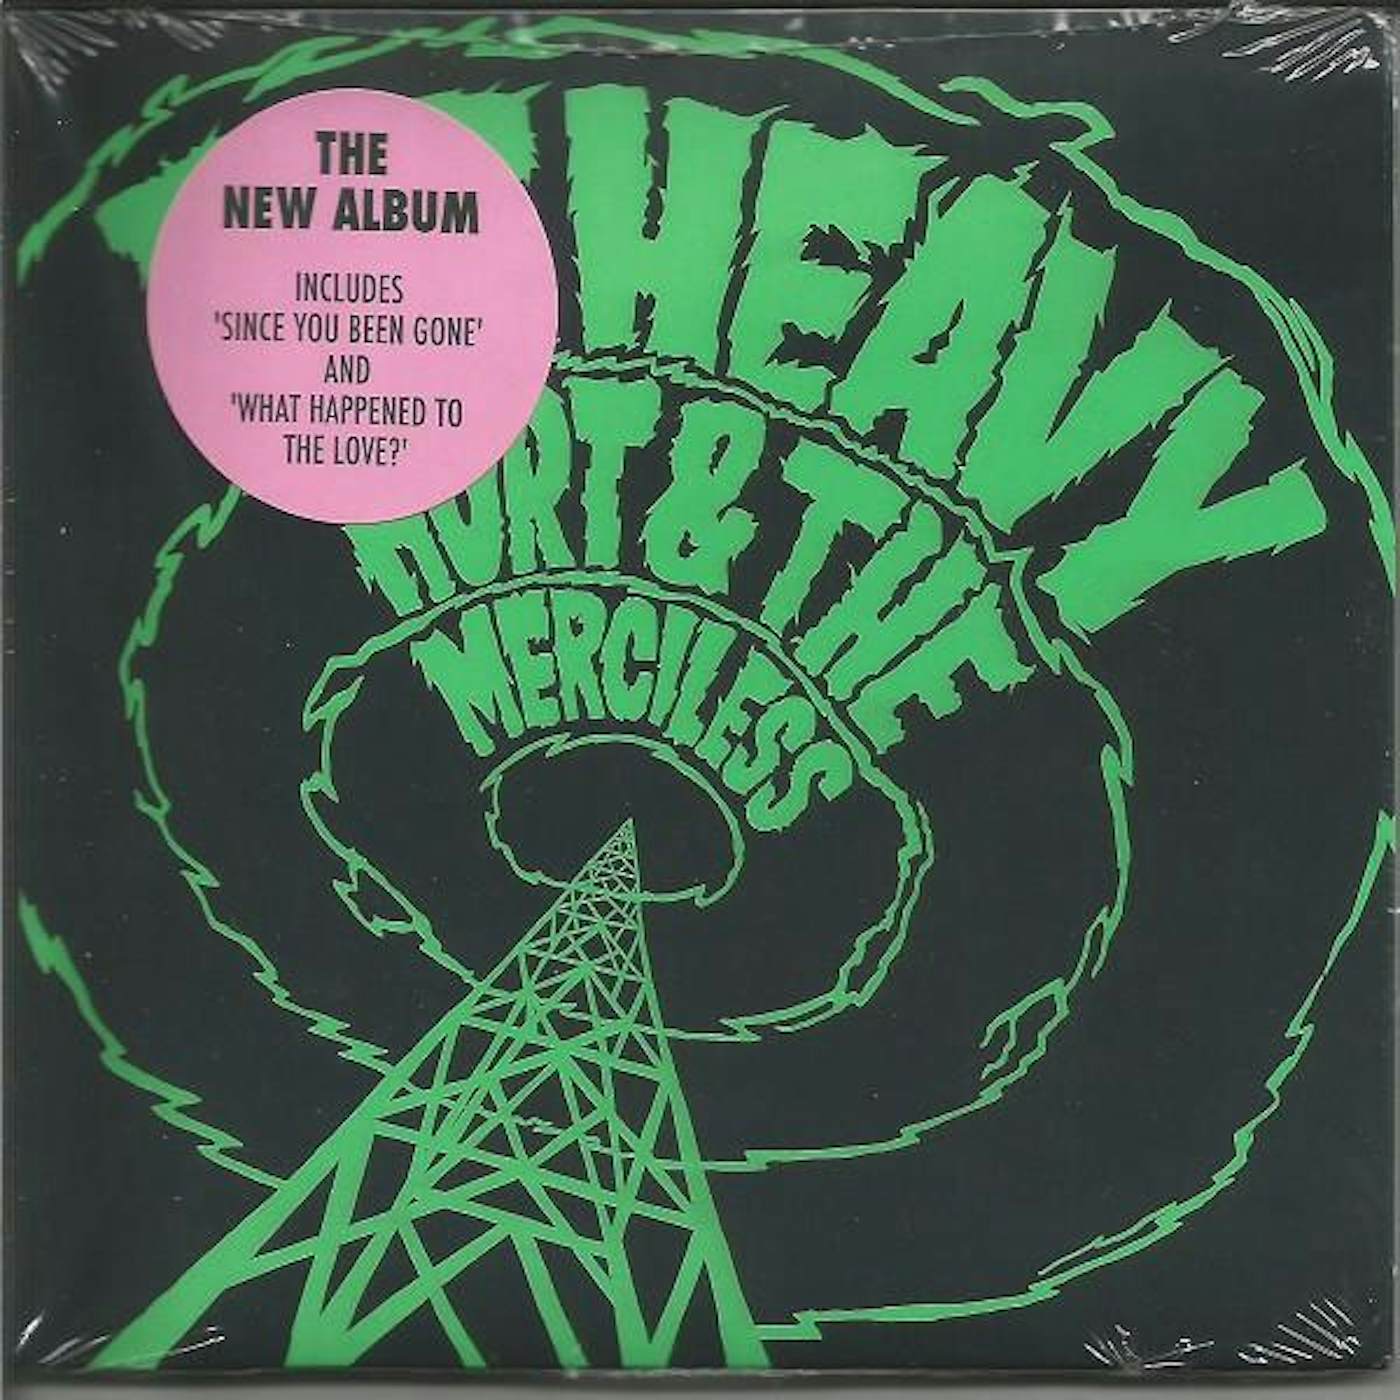 The Heavy HURT & THE MERCILESS CD